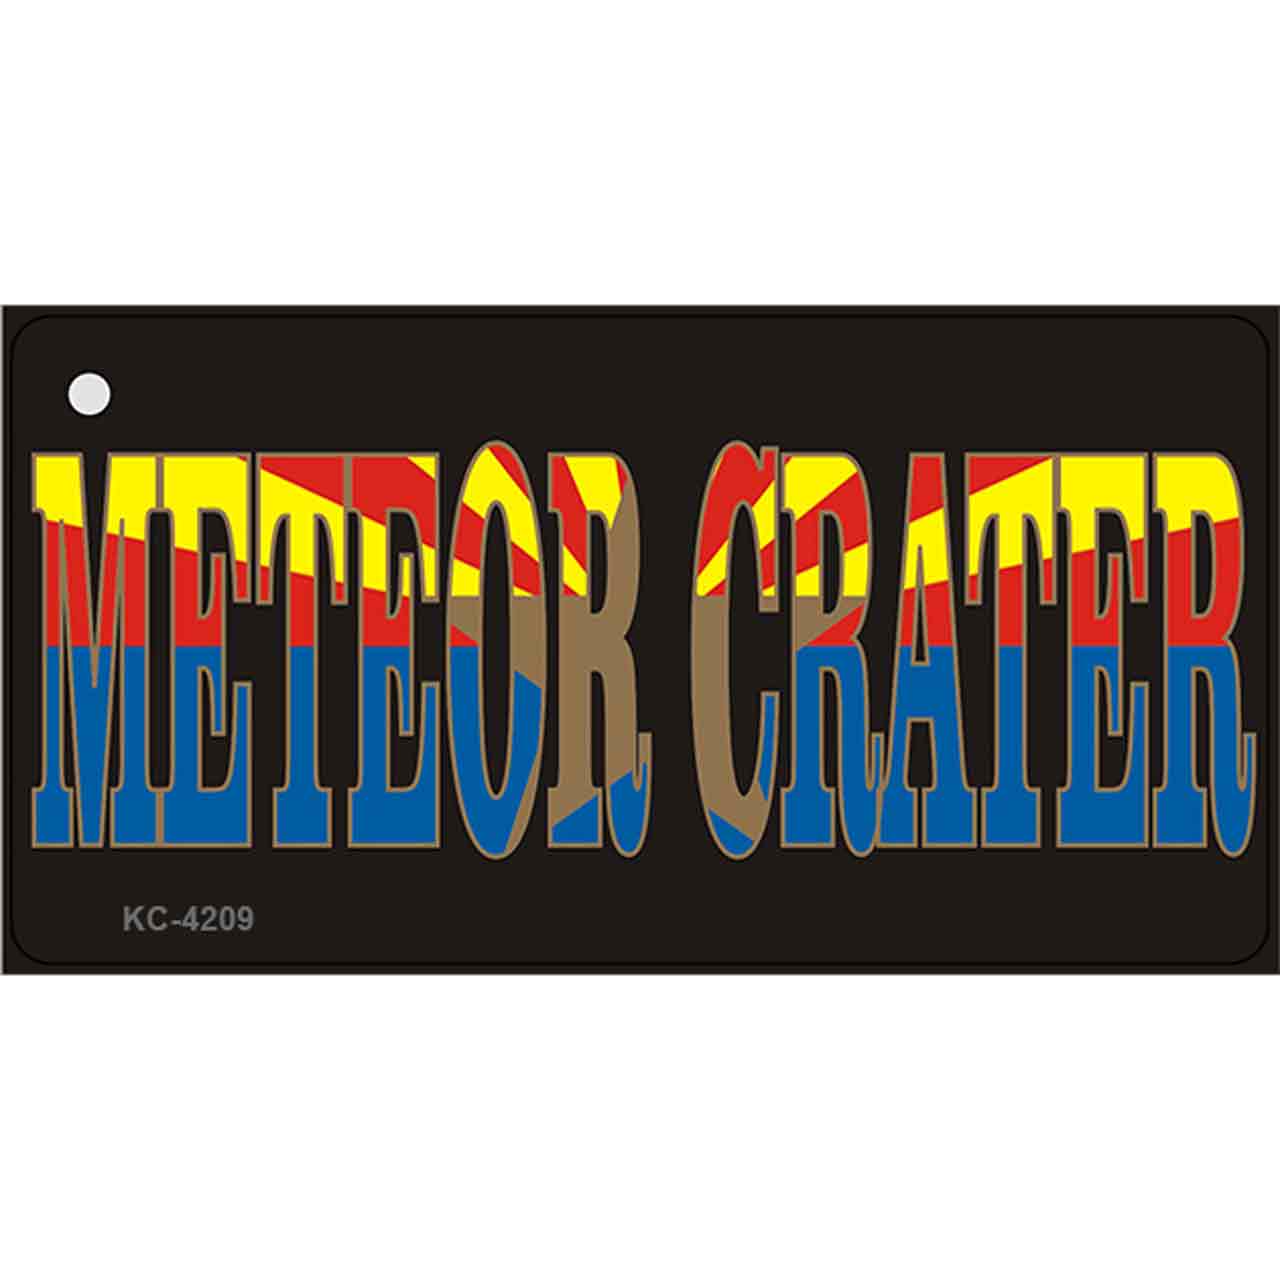 Meteor Crater Arizona Flag Novelty Metal Key Chain